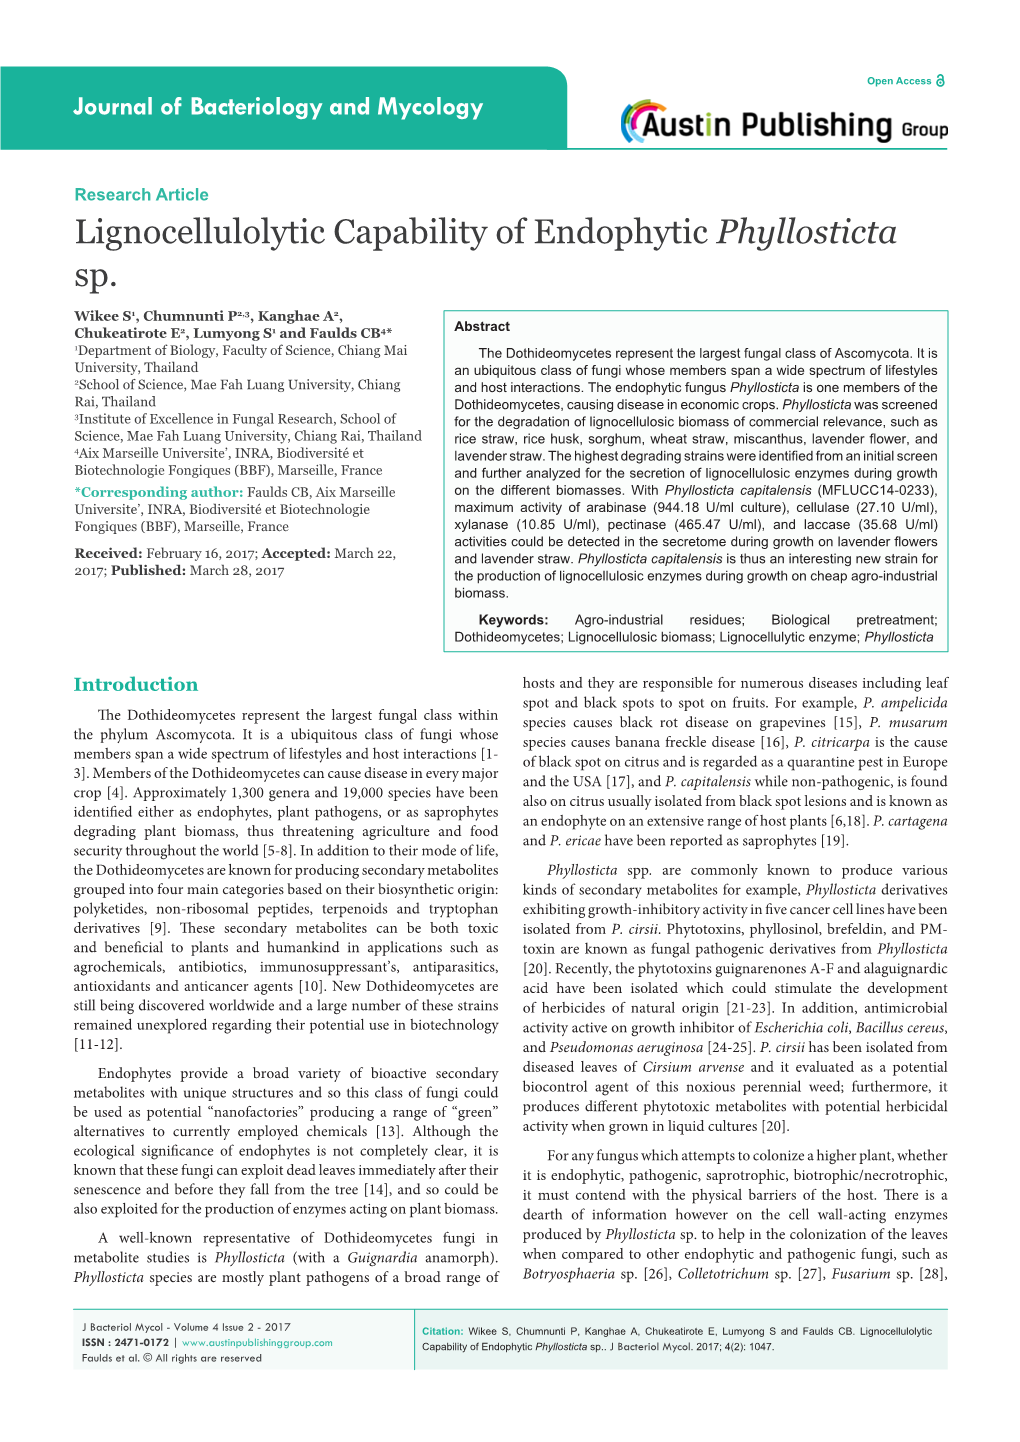 Lignocellulolytic Capability of Endophytic Phyllosticta Sp